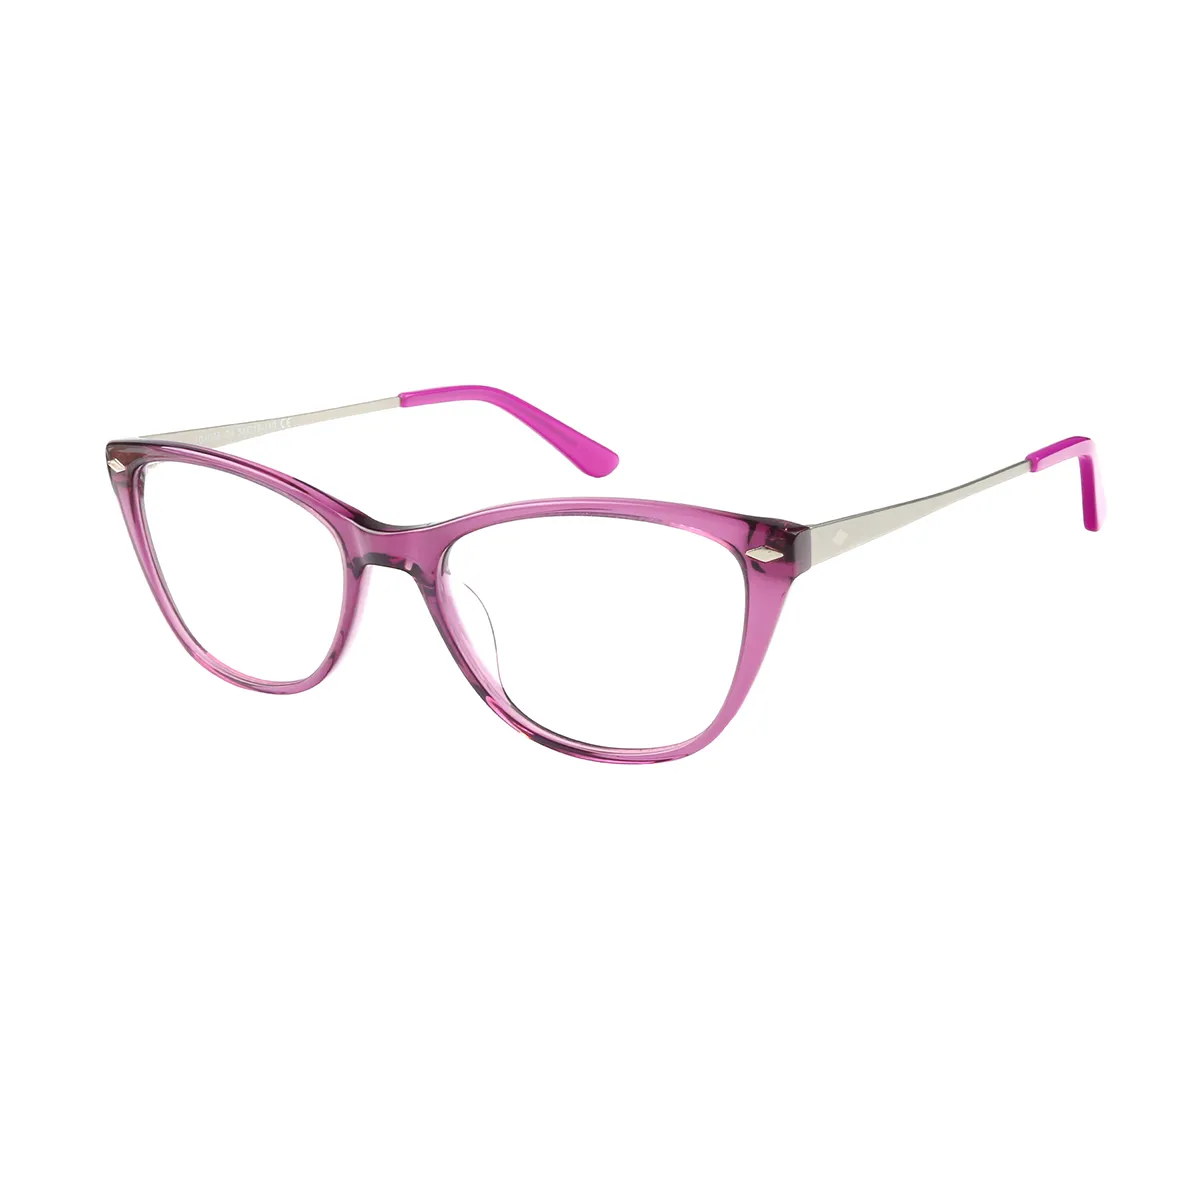 Corrie - Square Purple Glasses for Women - EFE